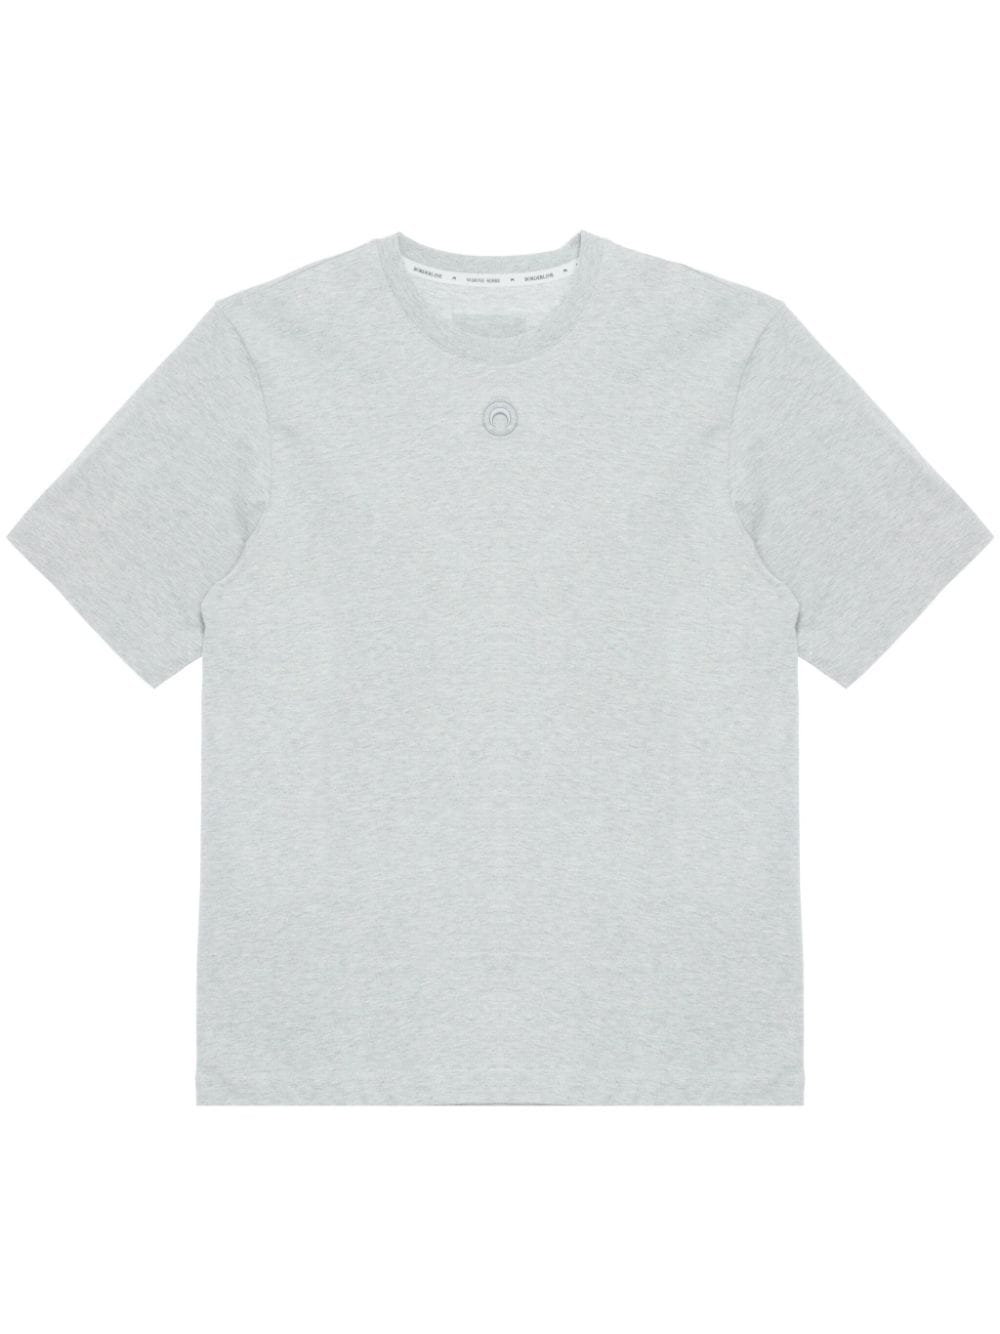 Marine Serre Crescent Moon-appliqué Cotton T-shirt In Blue